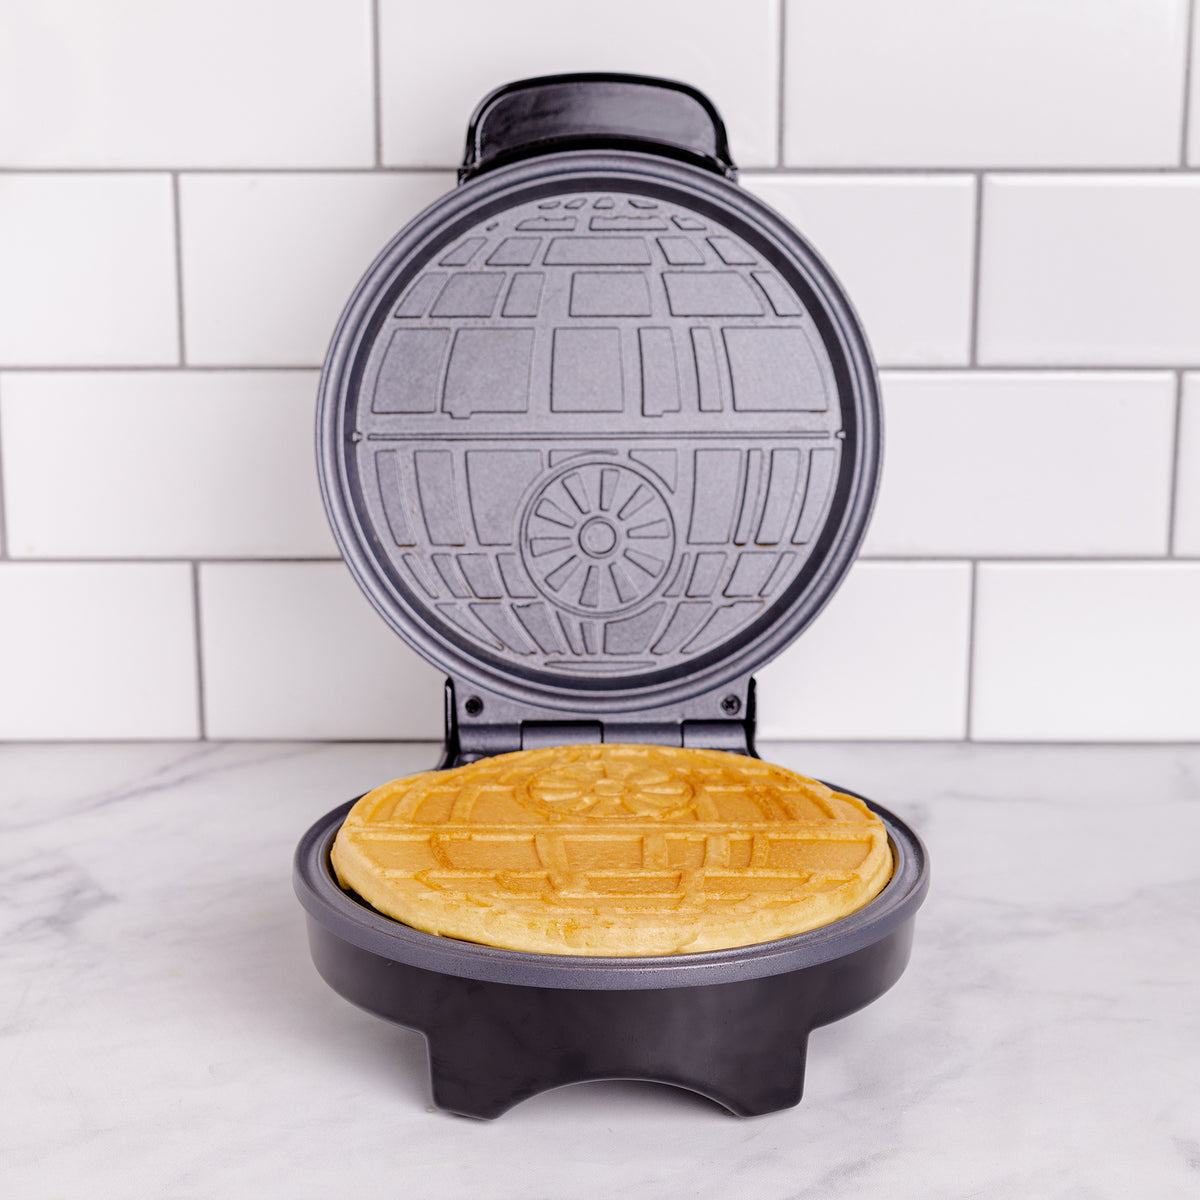 Uncanny Brands Star Wars Halo Death Star Waffle Maker - 21874506